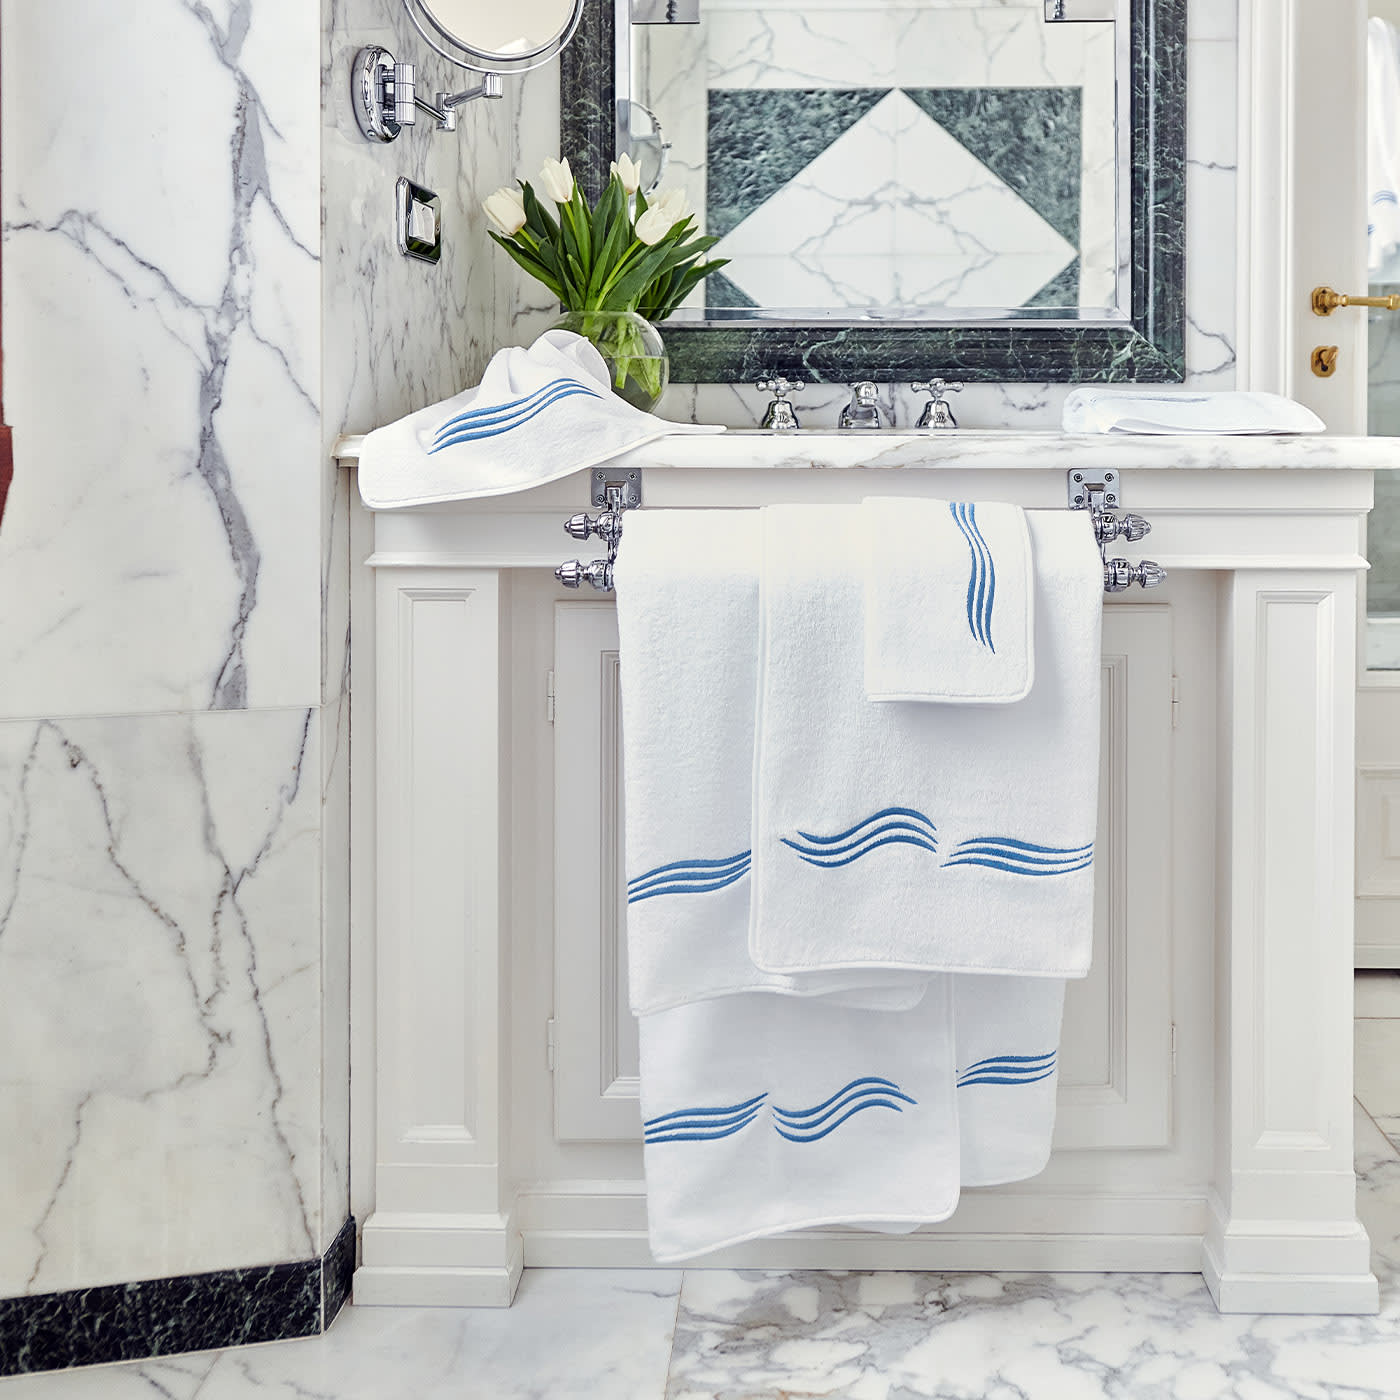 Tuffo White & Assisi Blue Bath Towel - Verderoccia